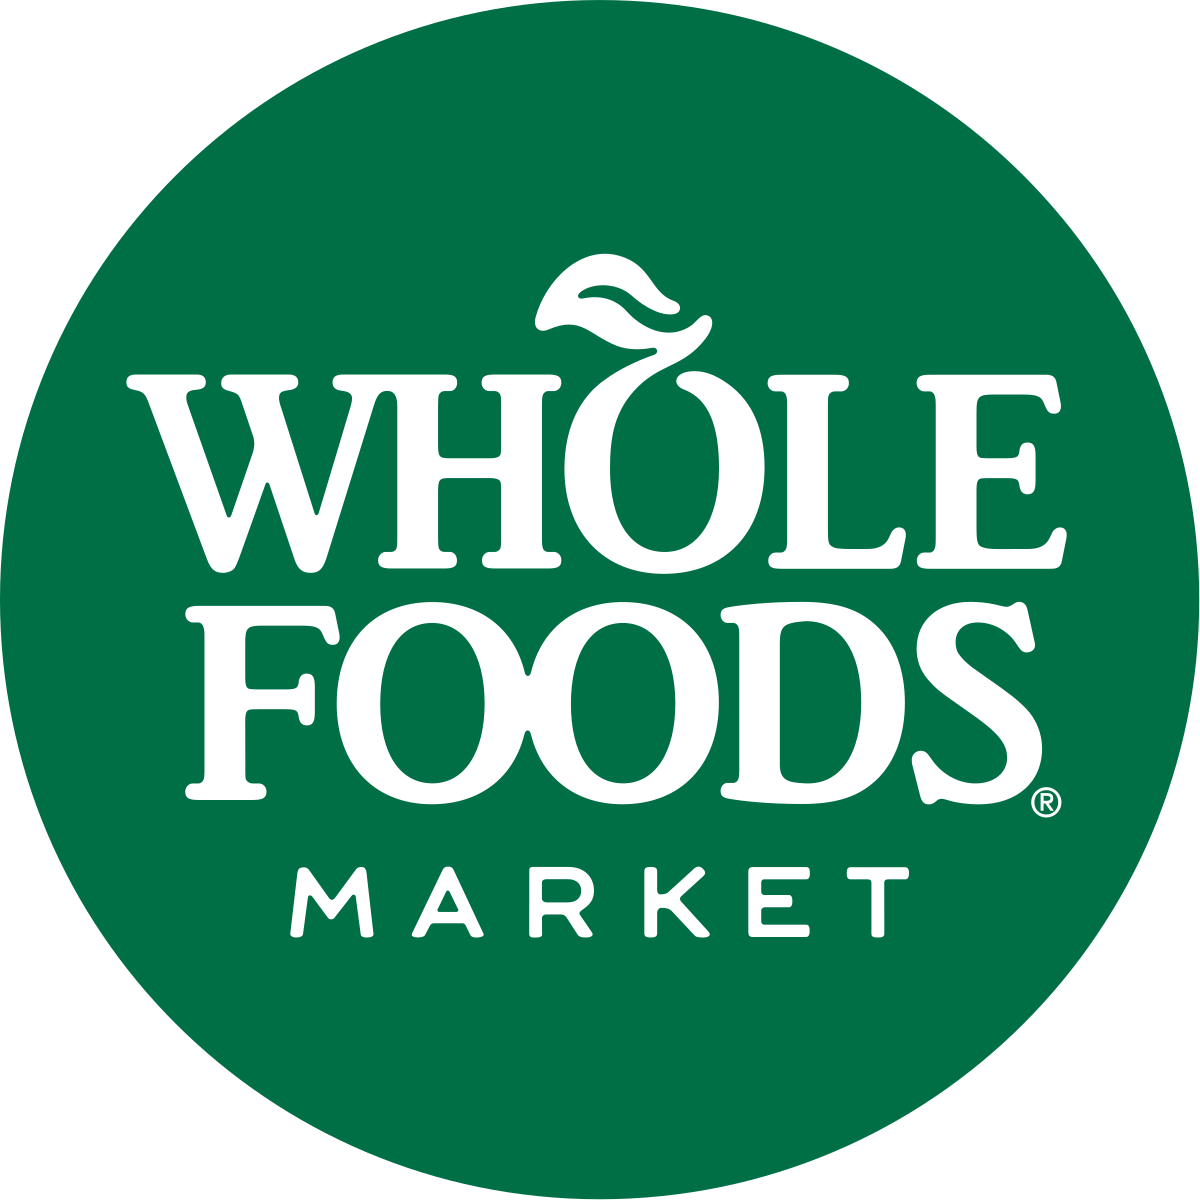 1200px Whole Foods Market 201x logo svg